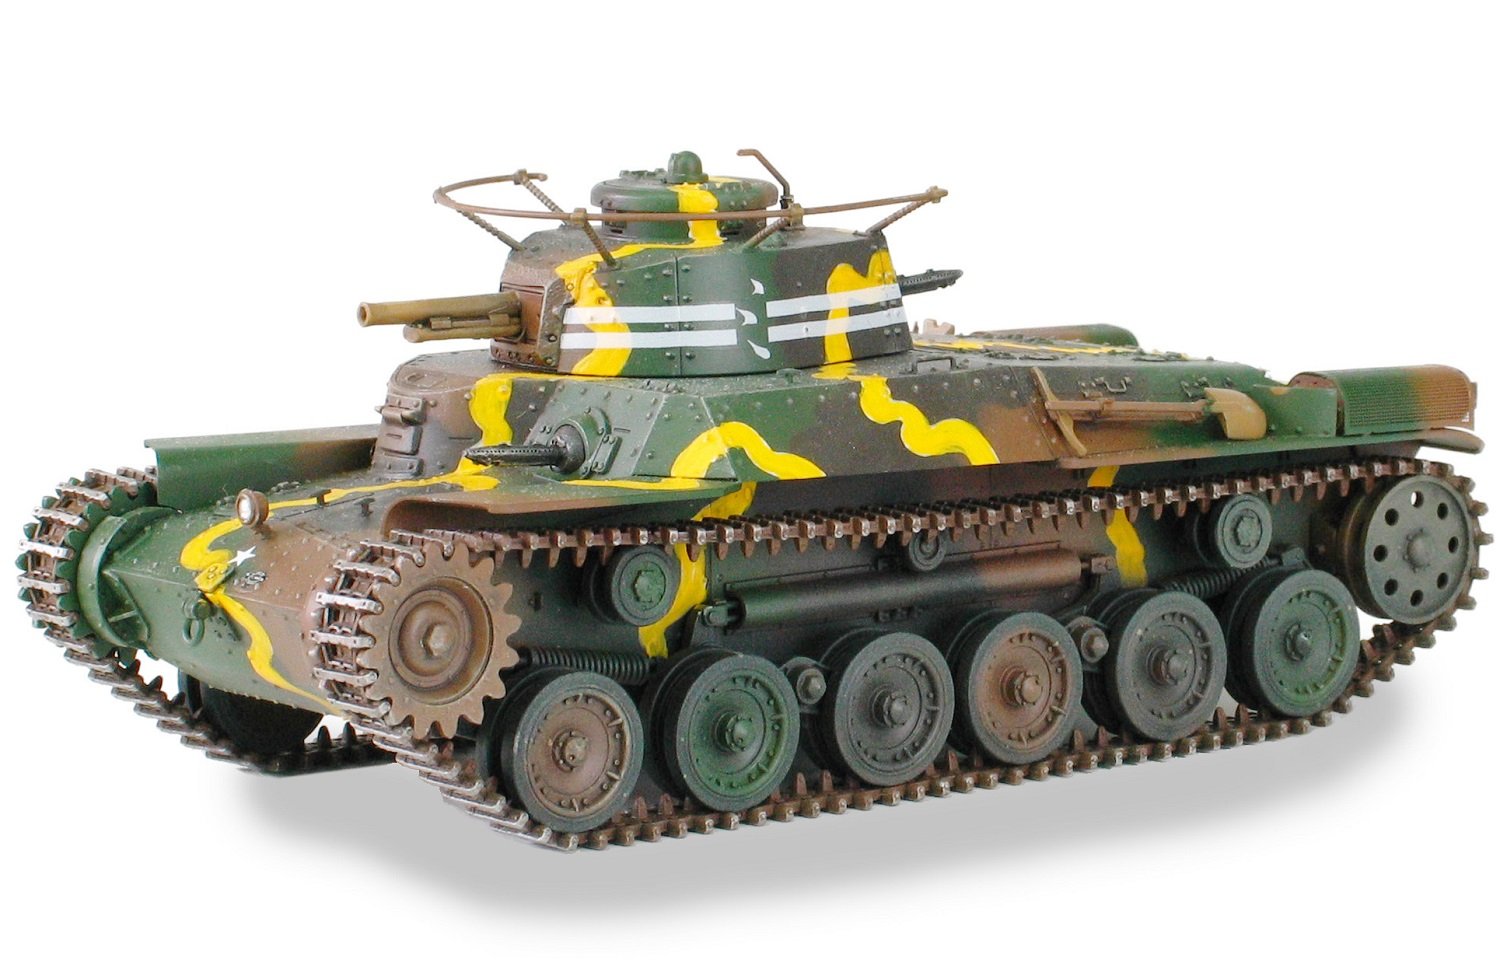 Imperial Japanese Army Main Battle Tank Type 97 `CHI-HA` (Improv